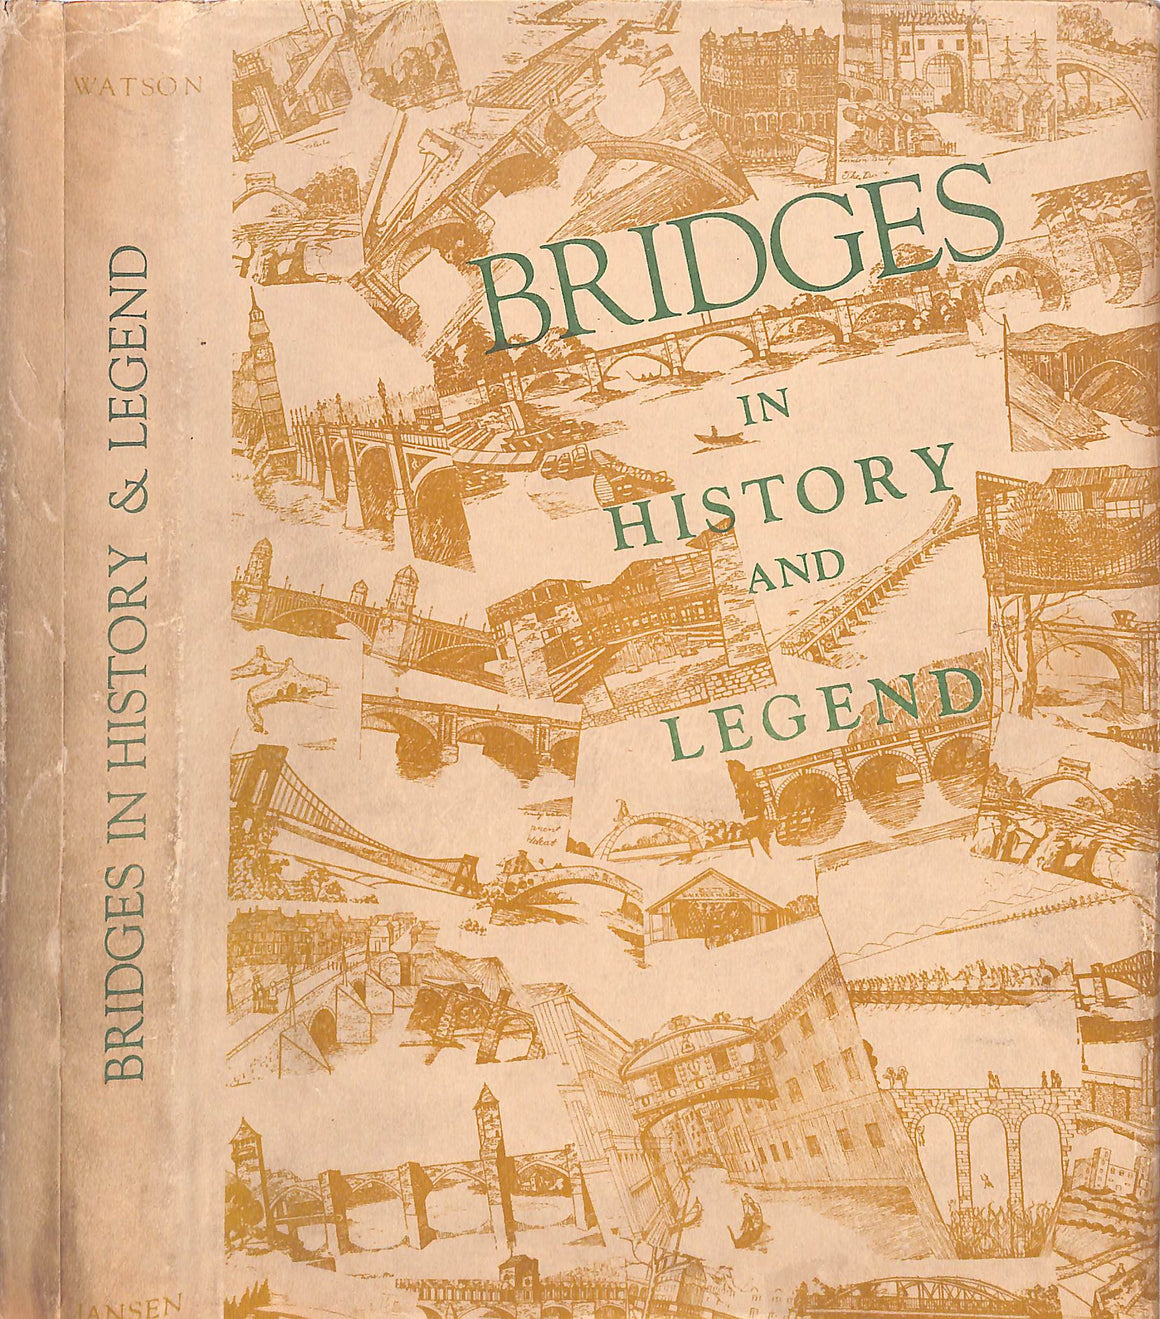 "Bridges In History And Legend" 1937 WATSON, Wilbur J. & Sara Ruth